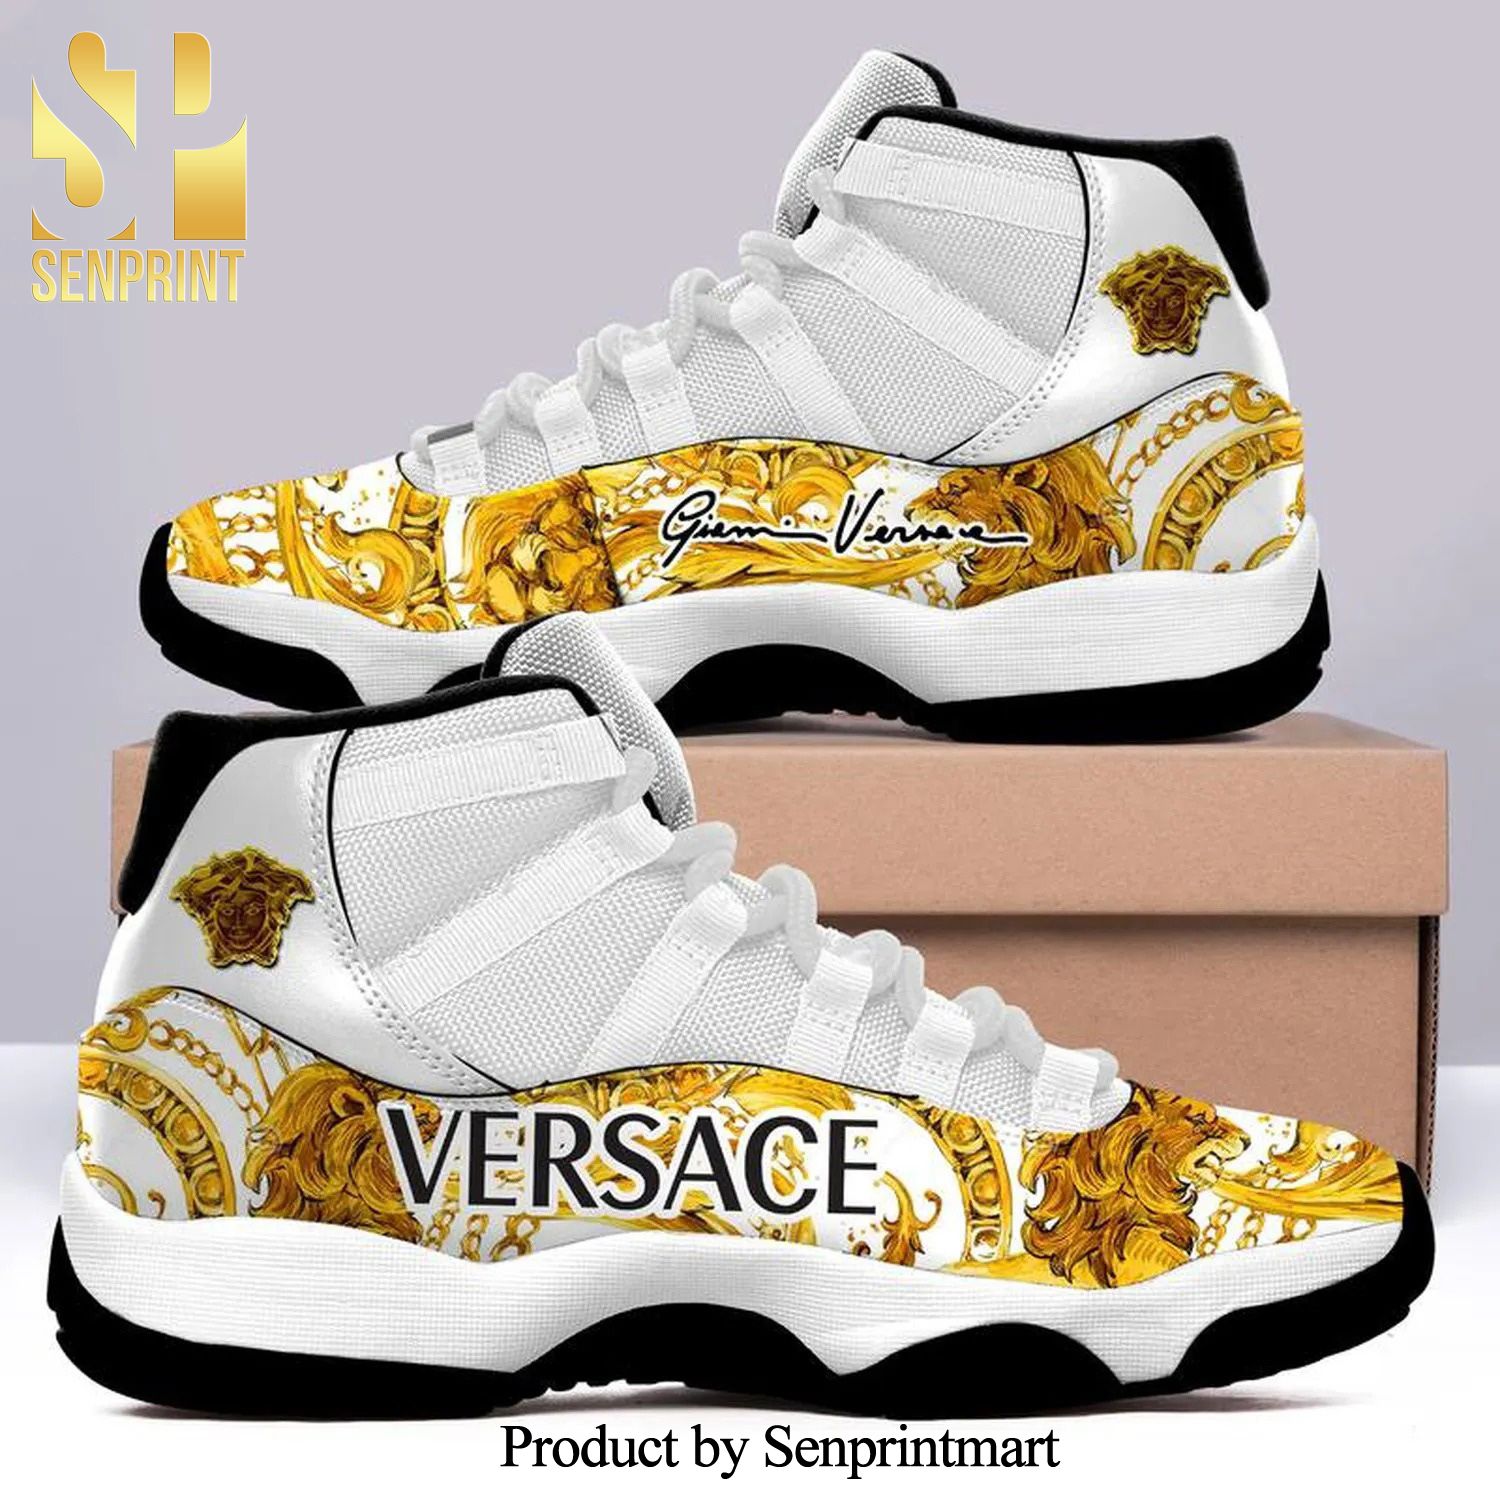 versace monogram white and gold New Fashion Air Jordan 11